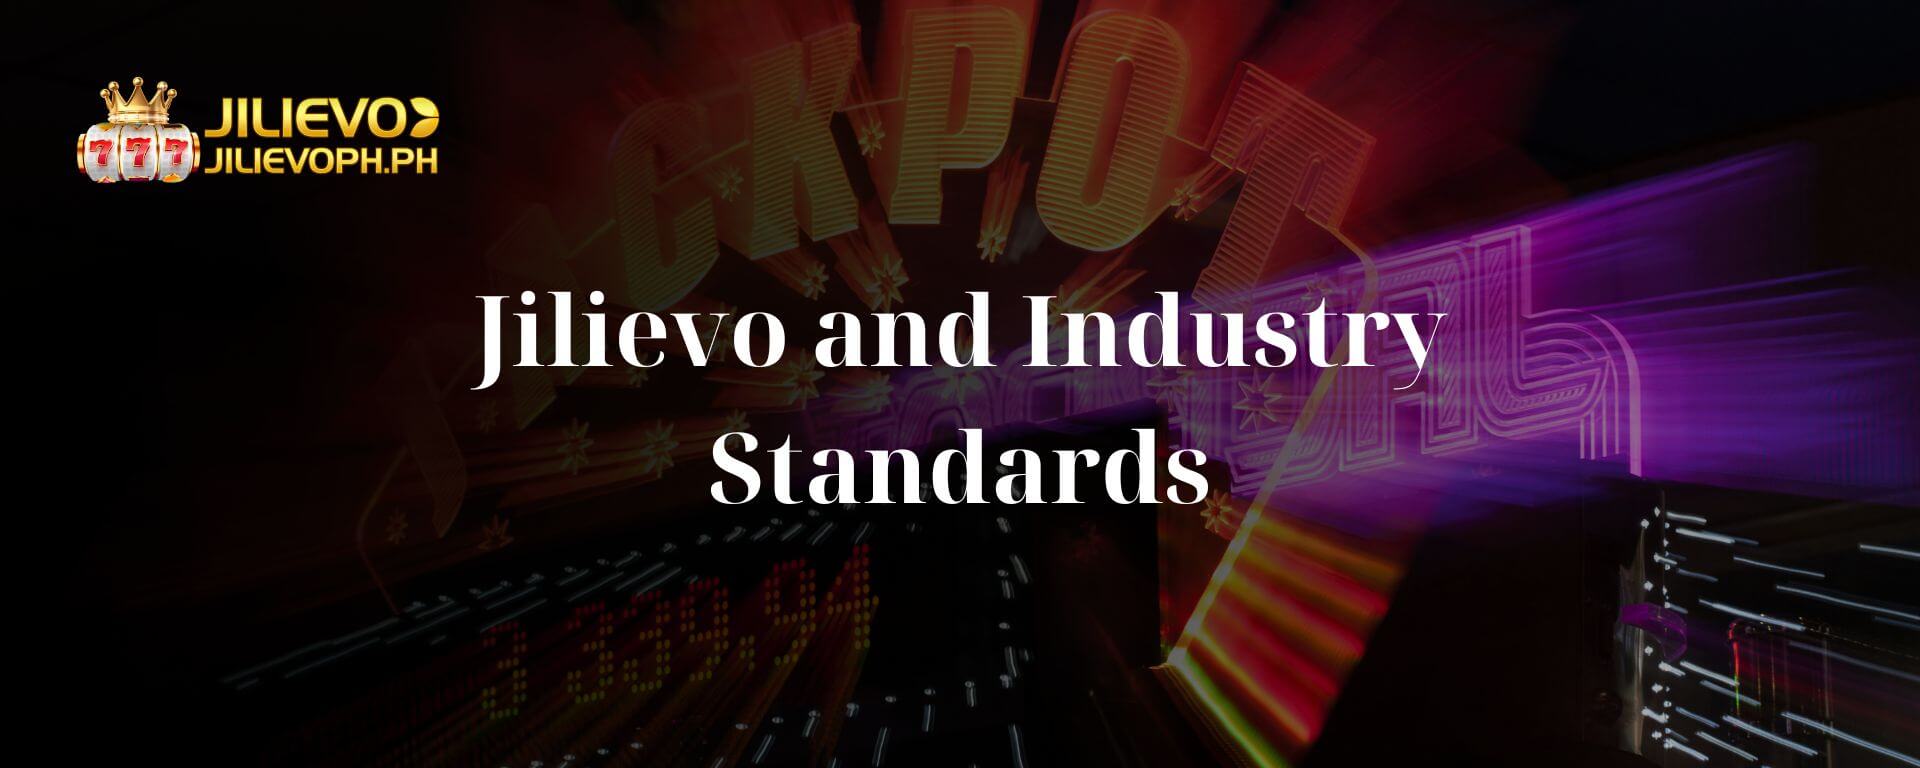 Jilievo and Industry Standards